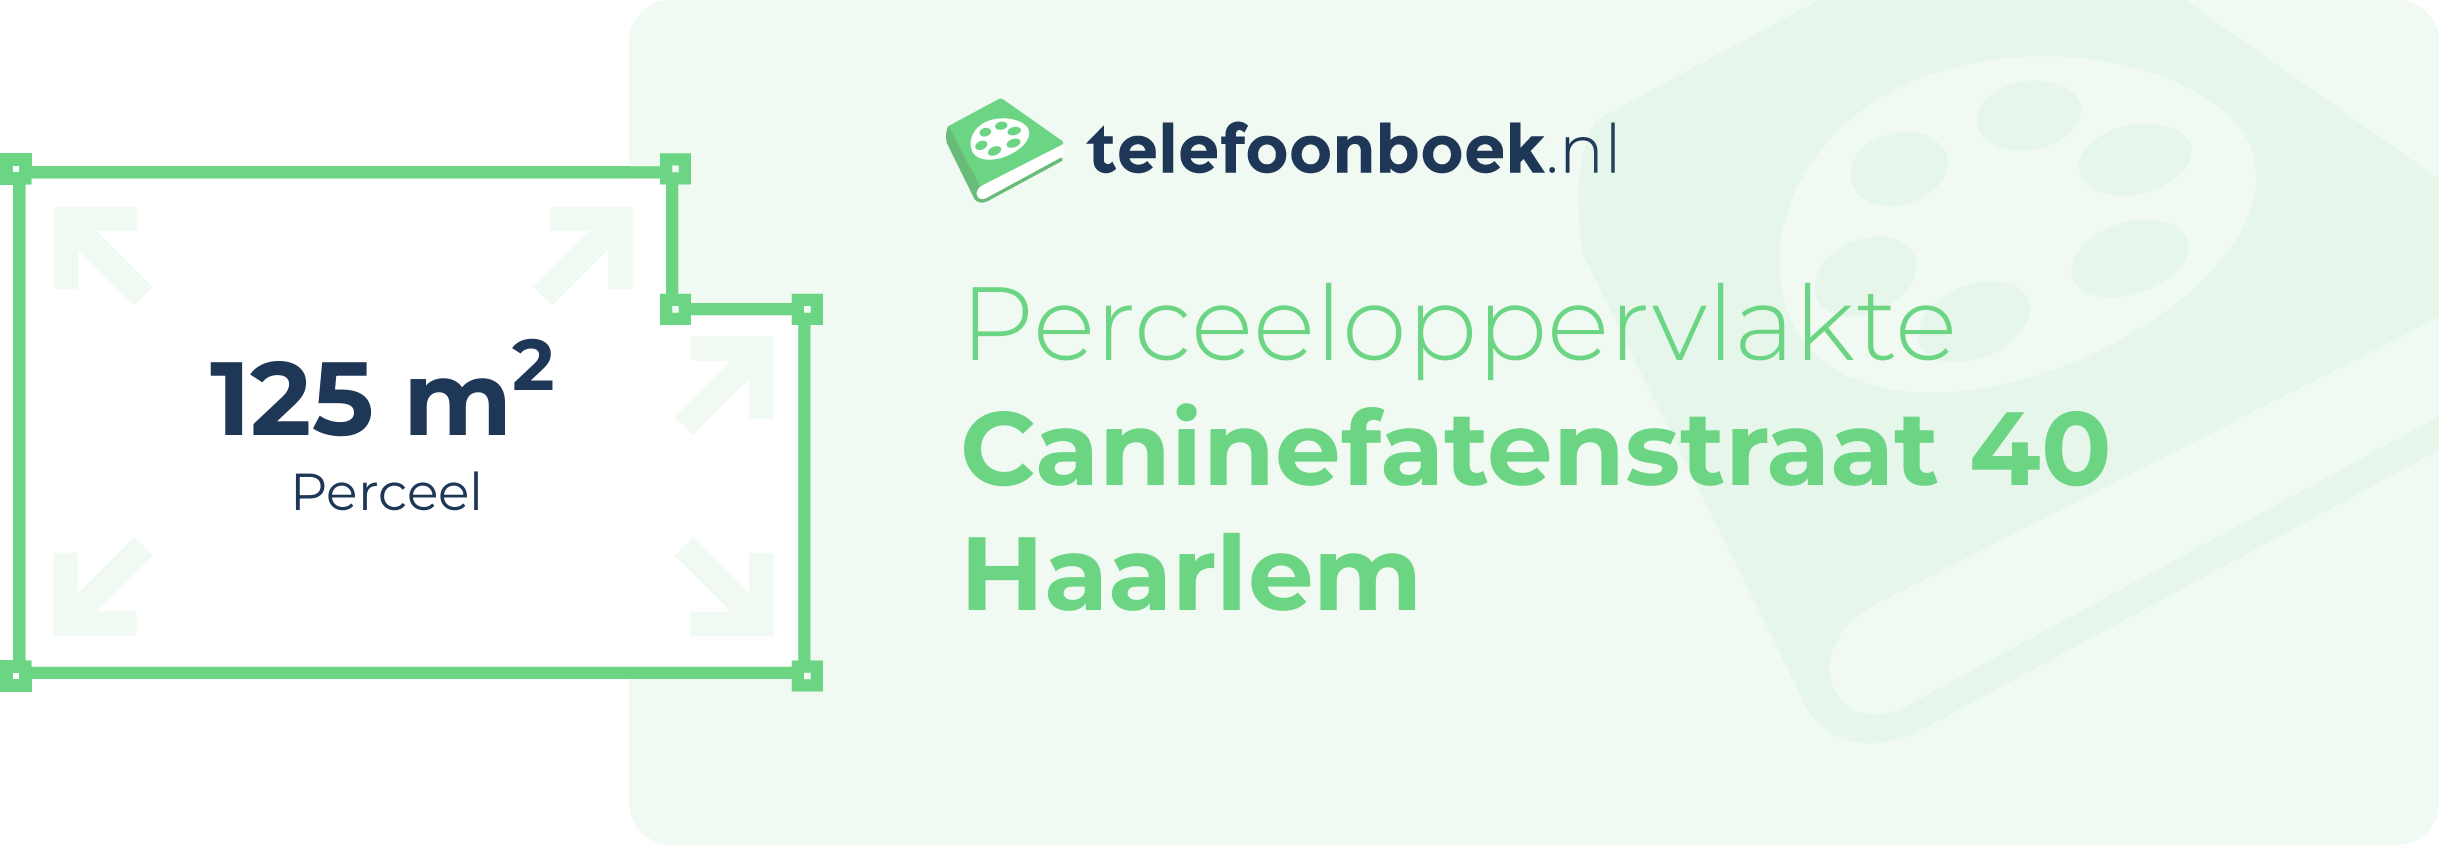 Perceeloppervlakte Caninefatenstraat 40 Haarlem